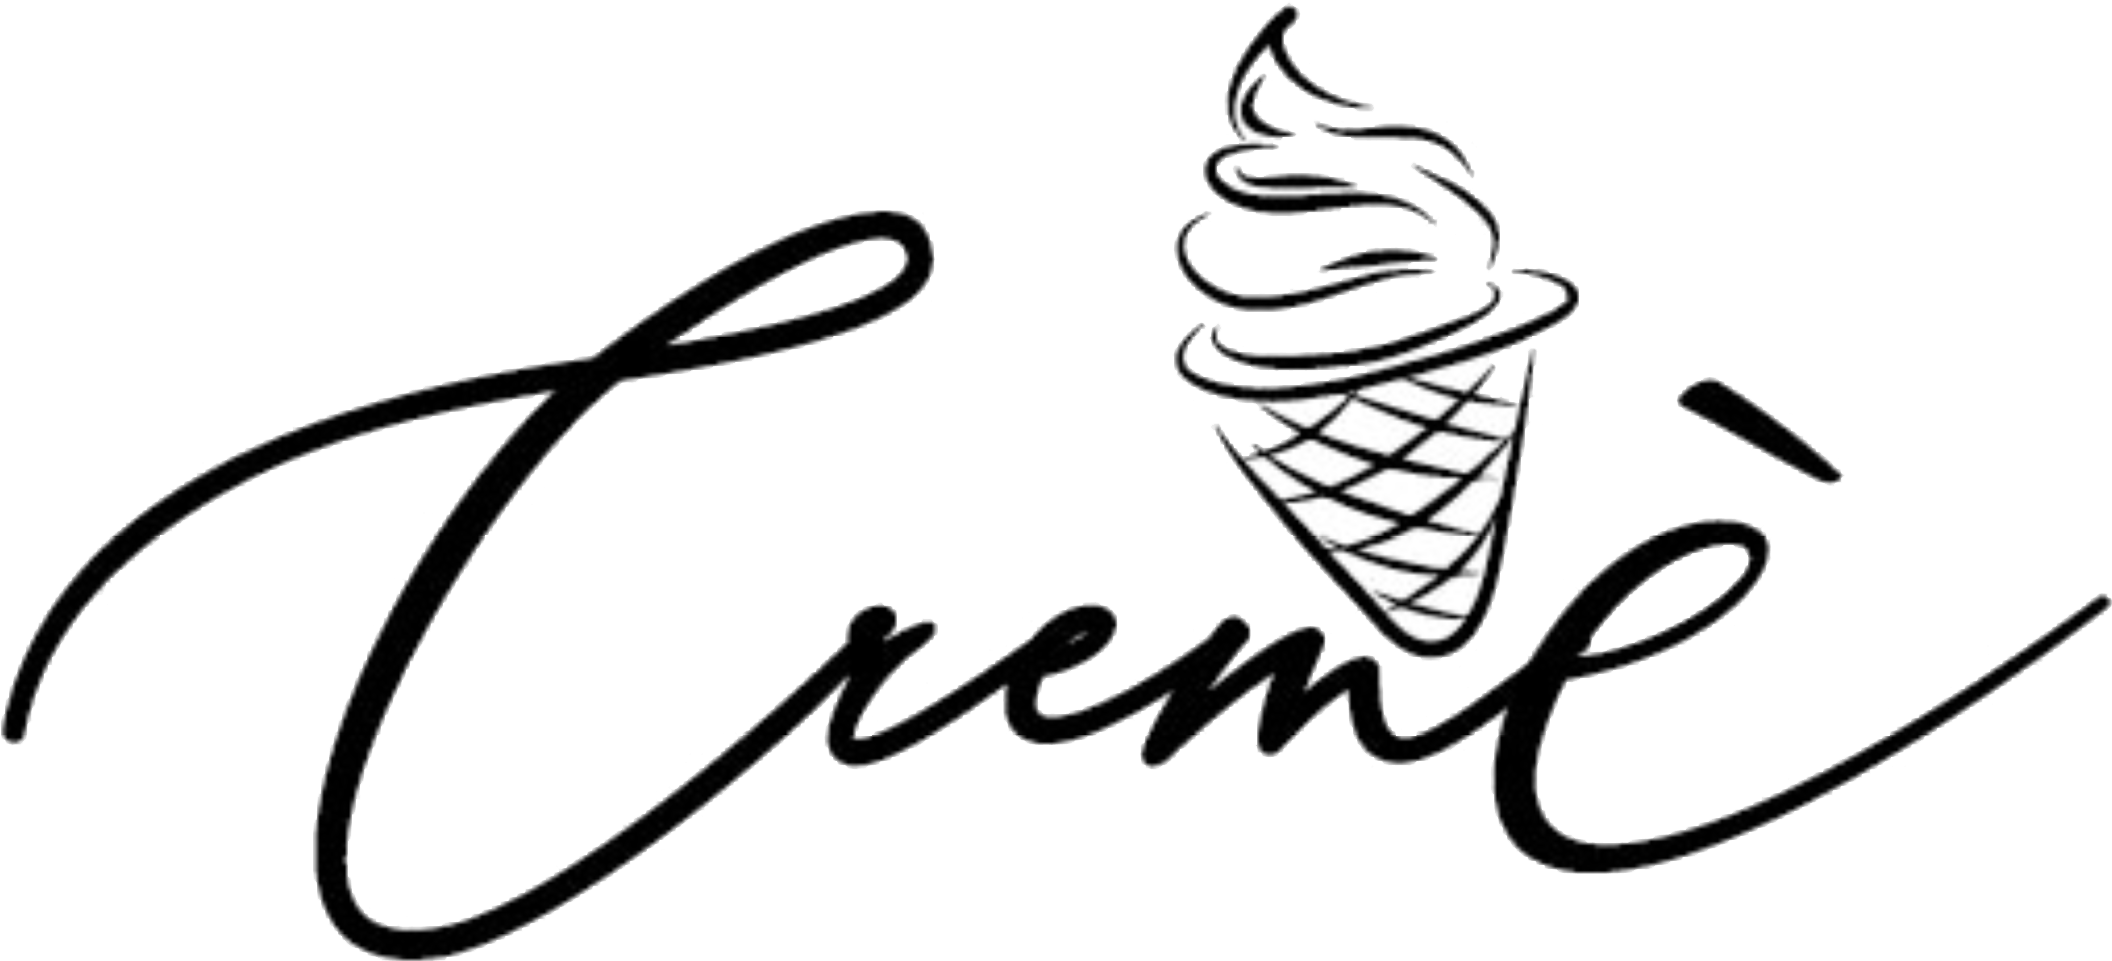 Cremé - Ice cream